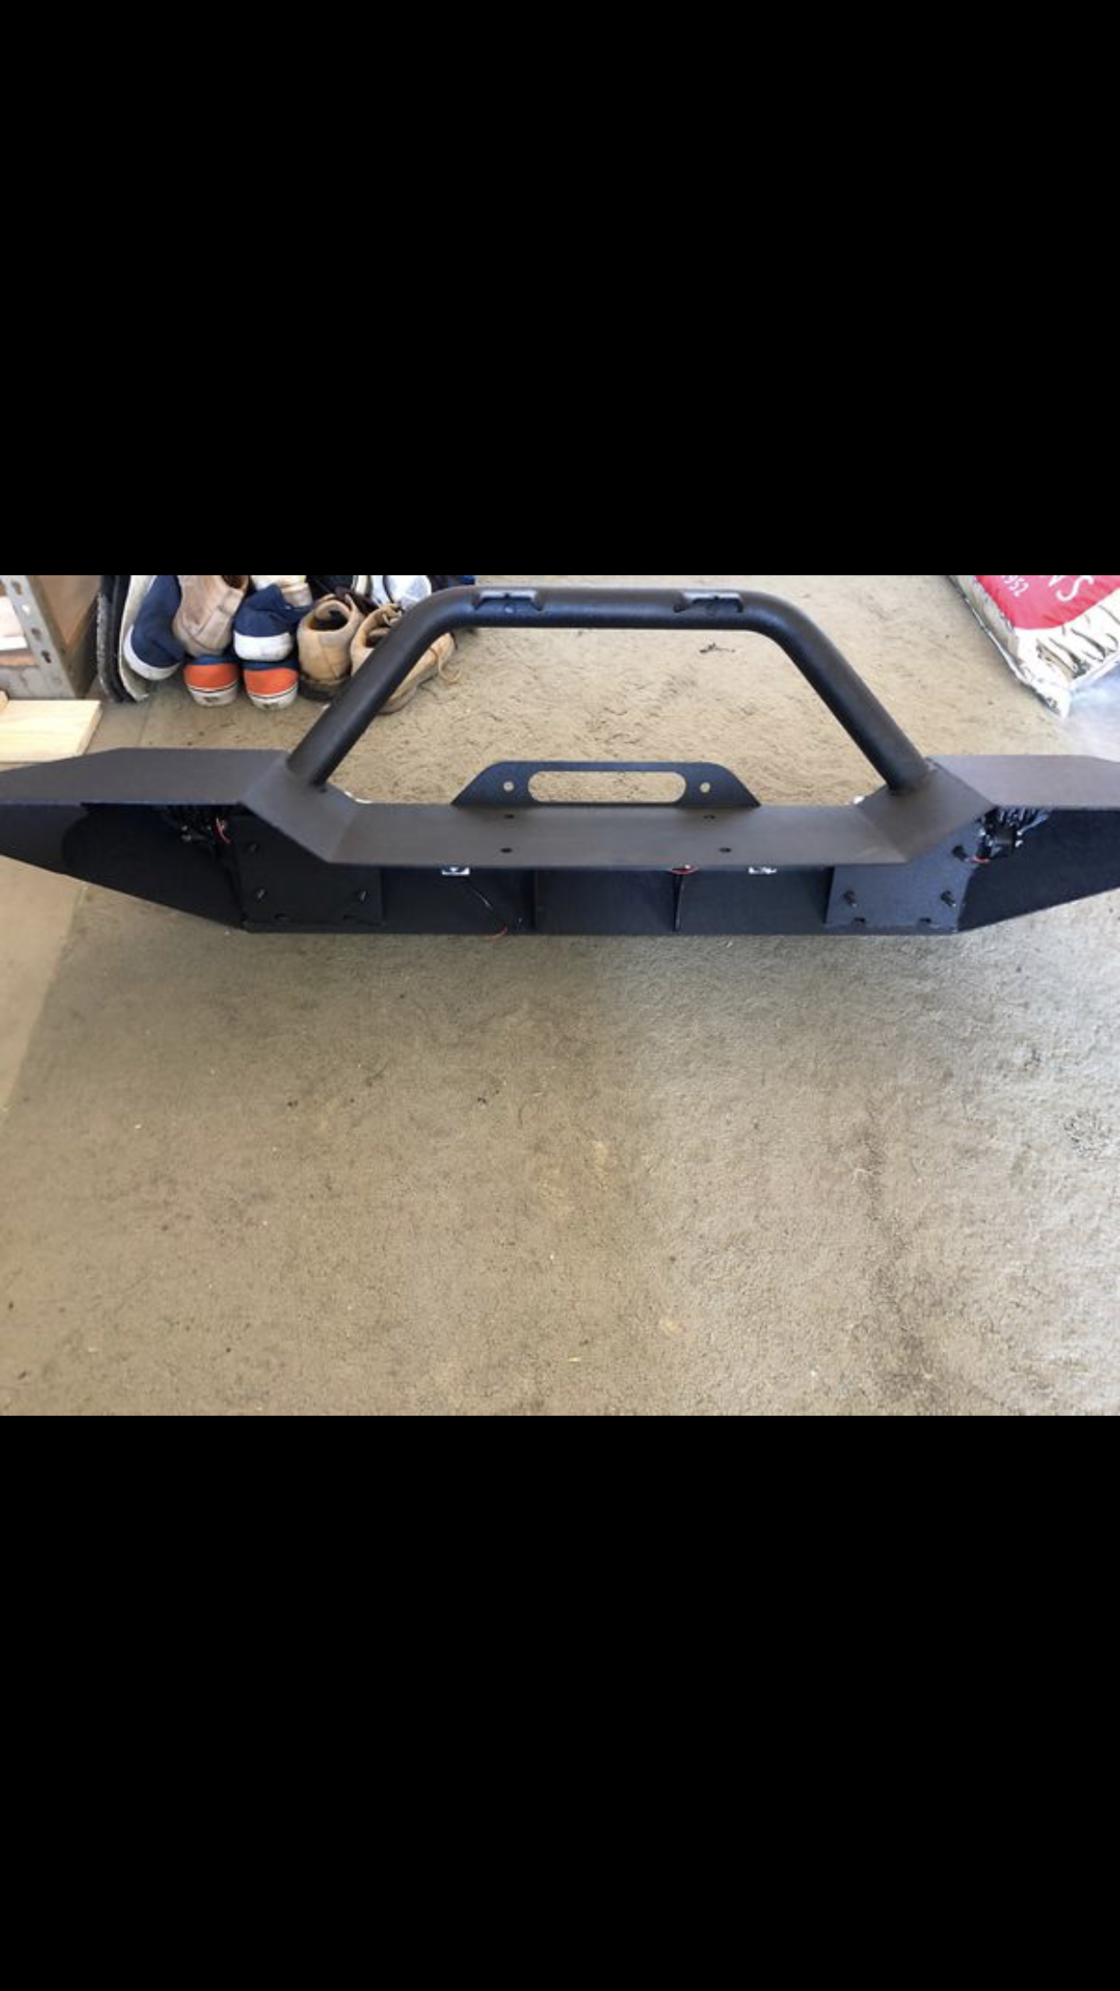 Exterior Body Parts - Wrangler JK or JKU rock crawler winch bumper - New - 2007 to 2018 Jeep Wrangler - Norco, CA 92860, United States